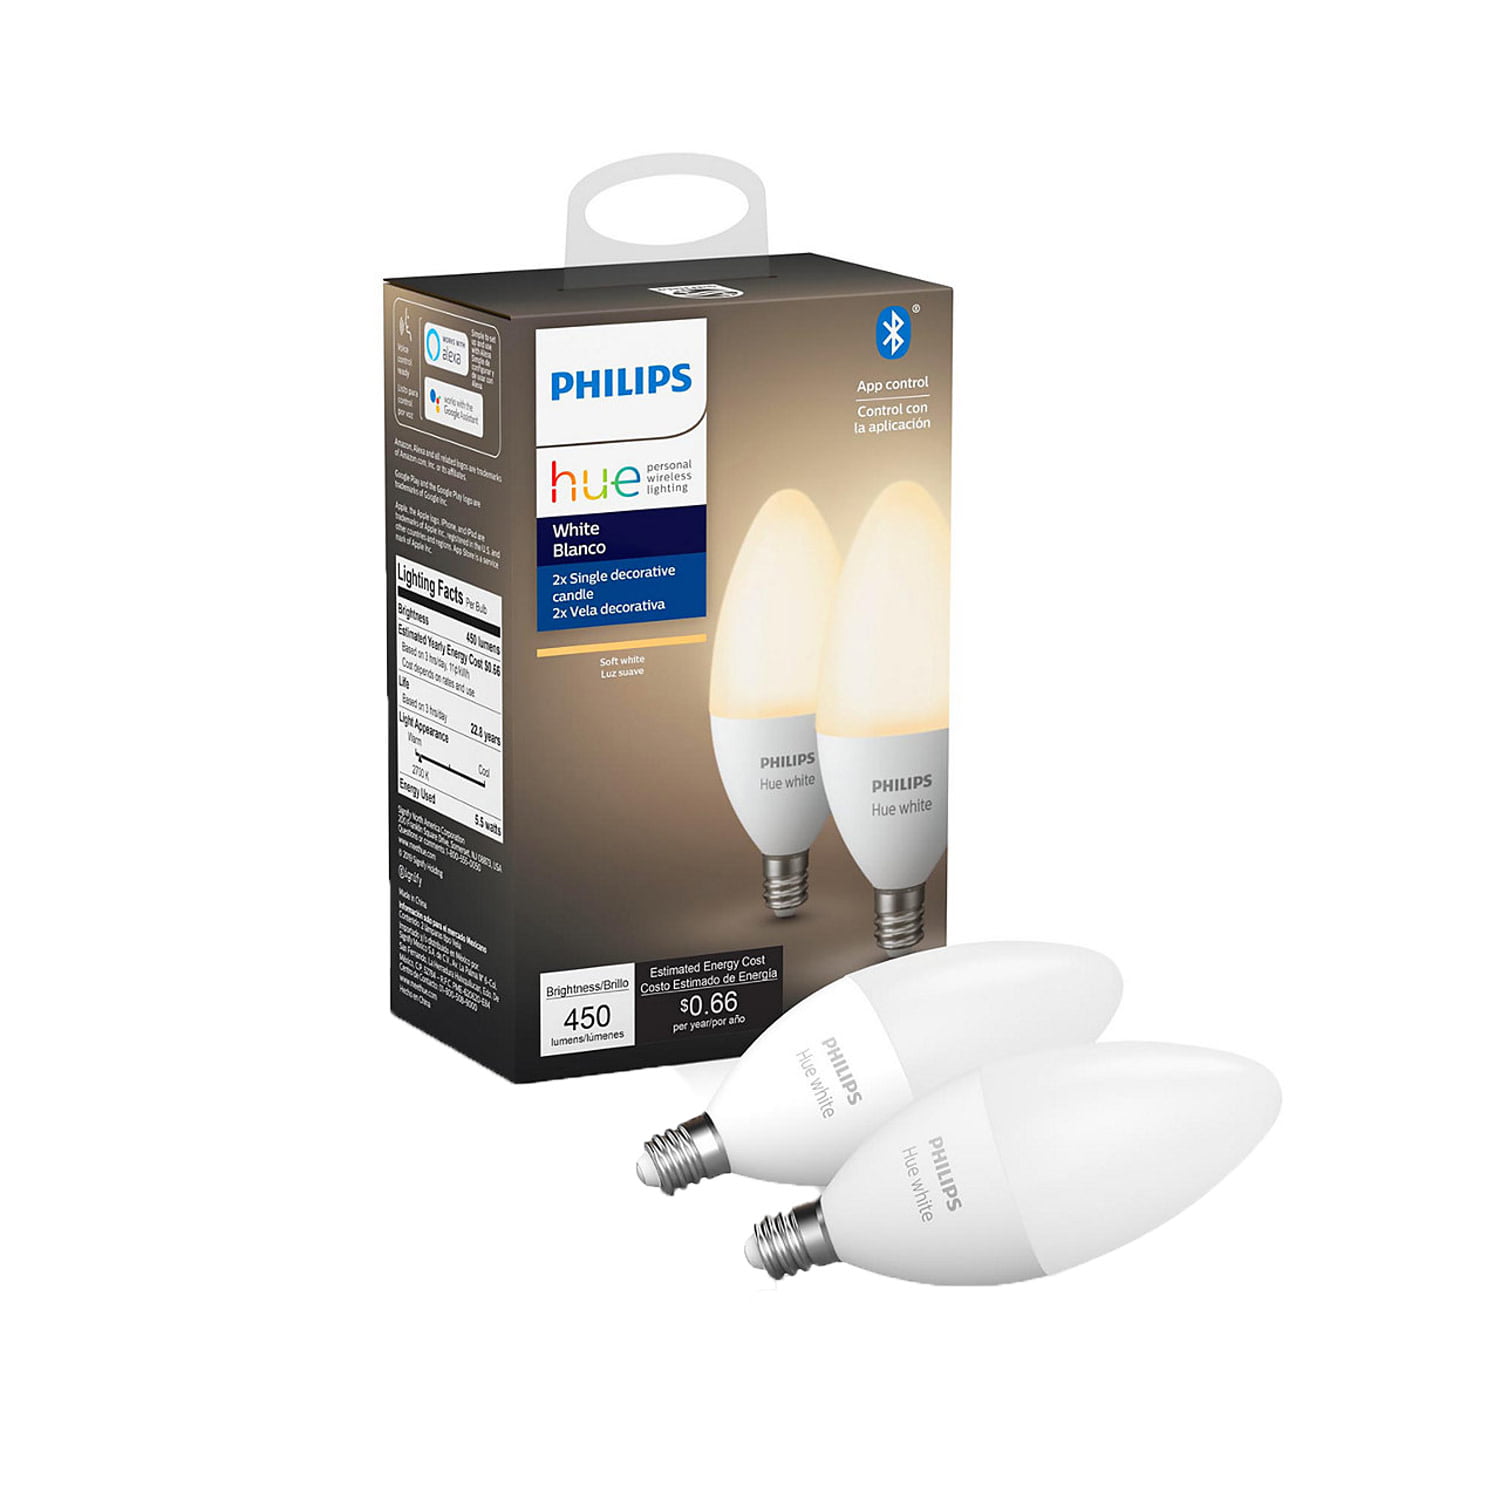 Philips Hue White  Color E12 Led Candle Light Bulb